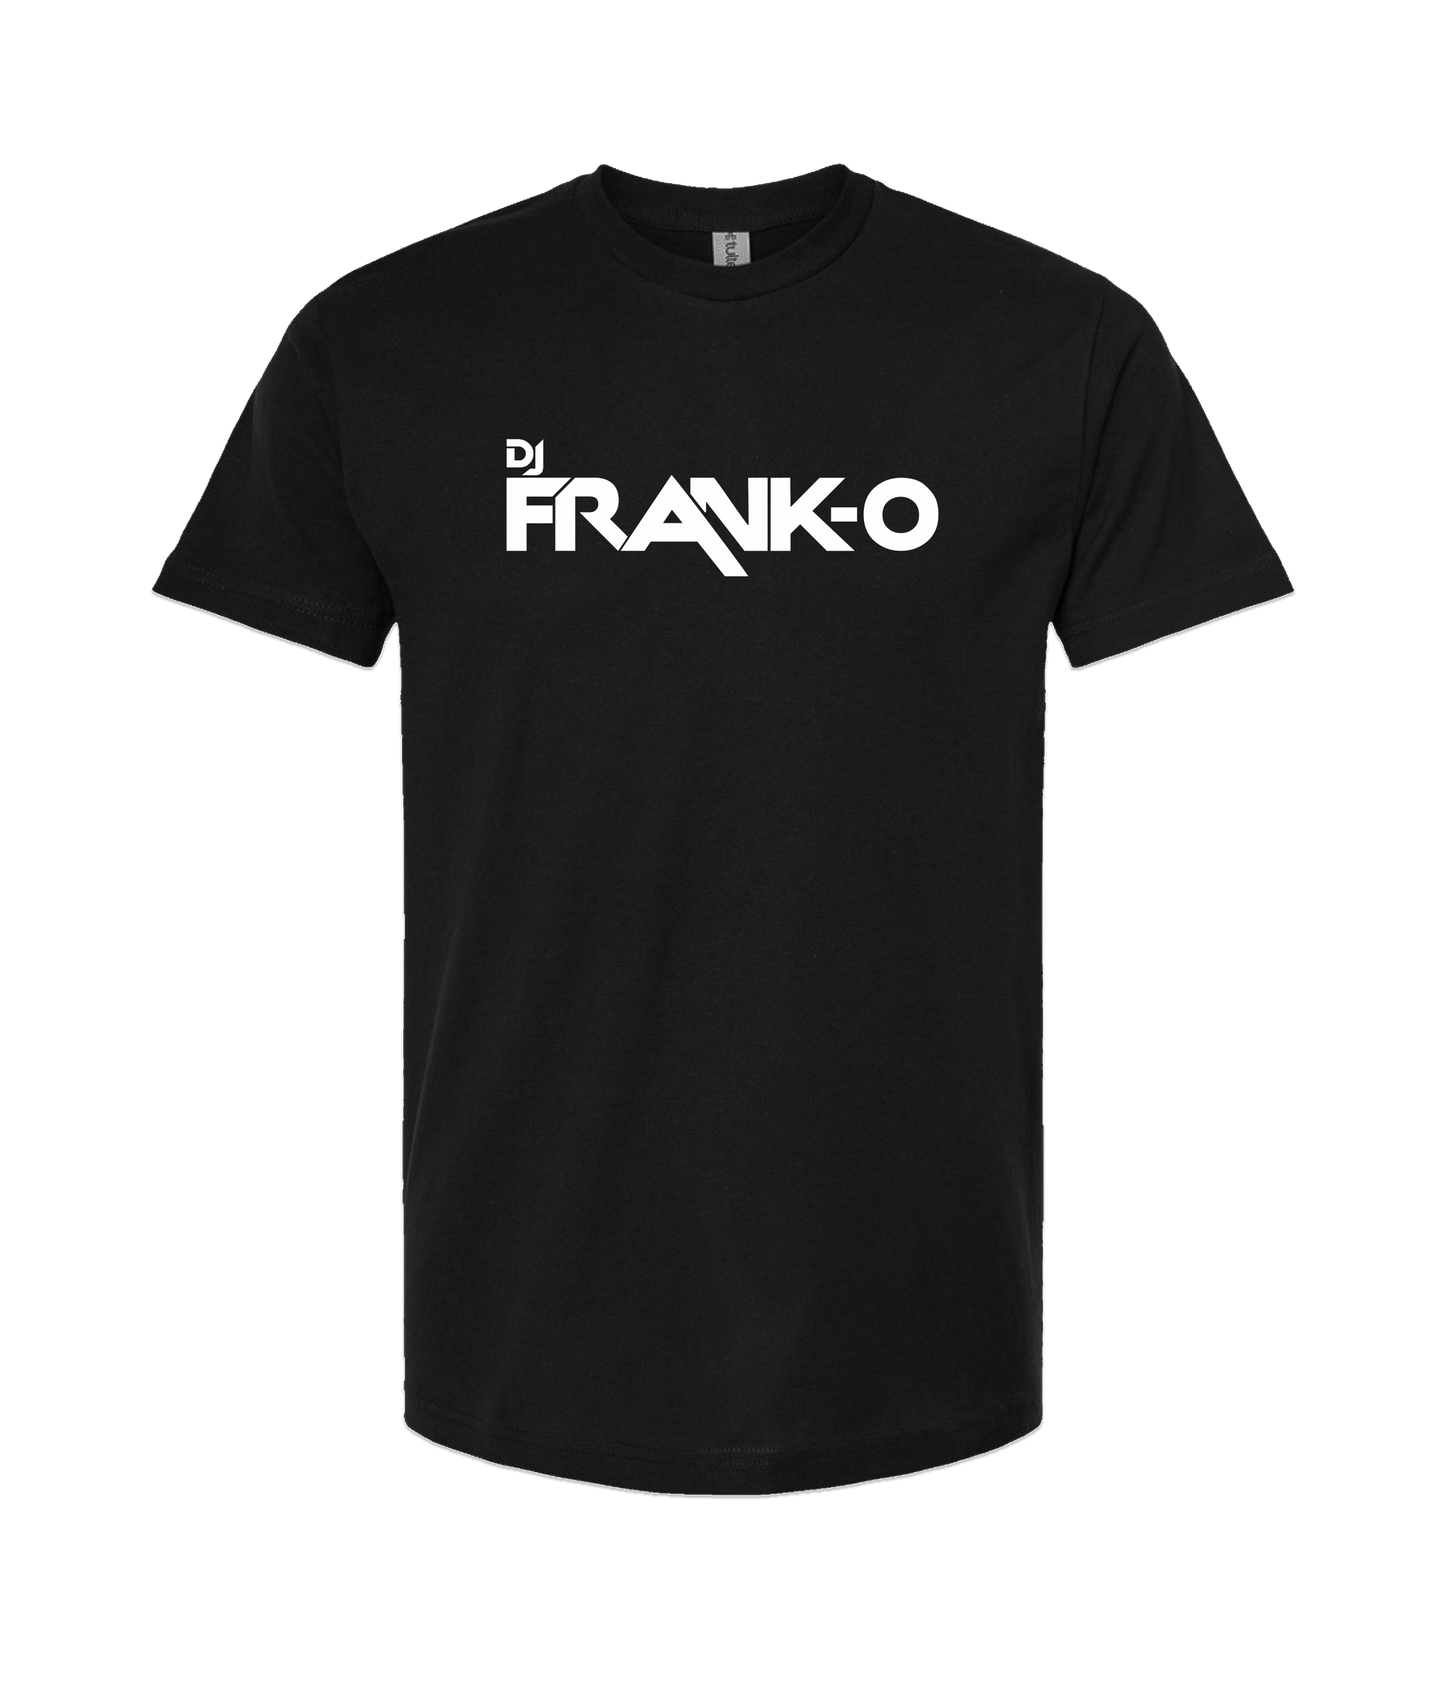 DJ FRANK - O - Logo - Black T Shirt